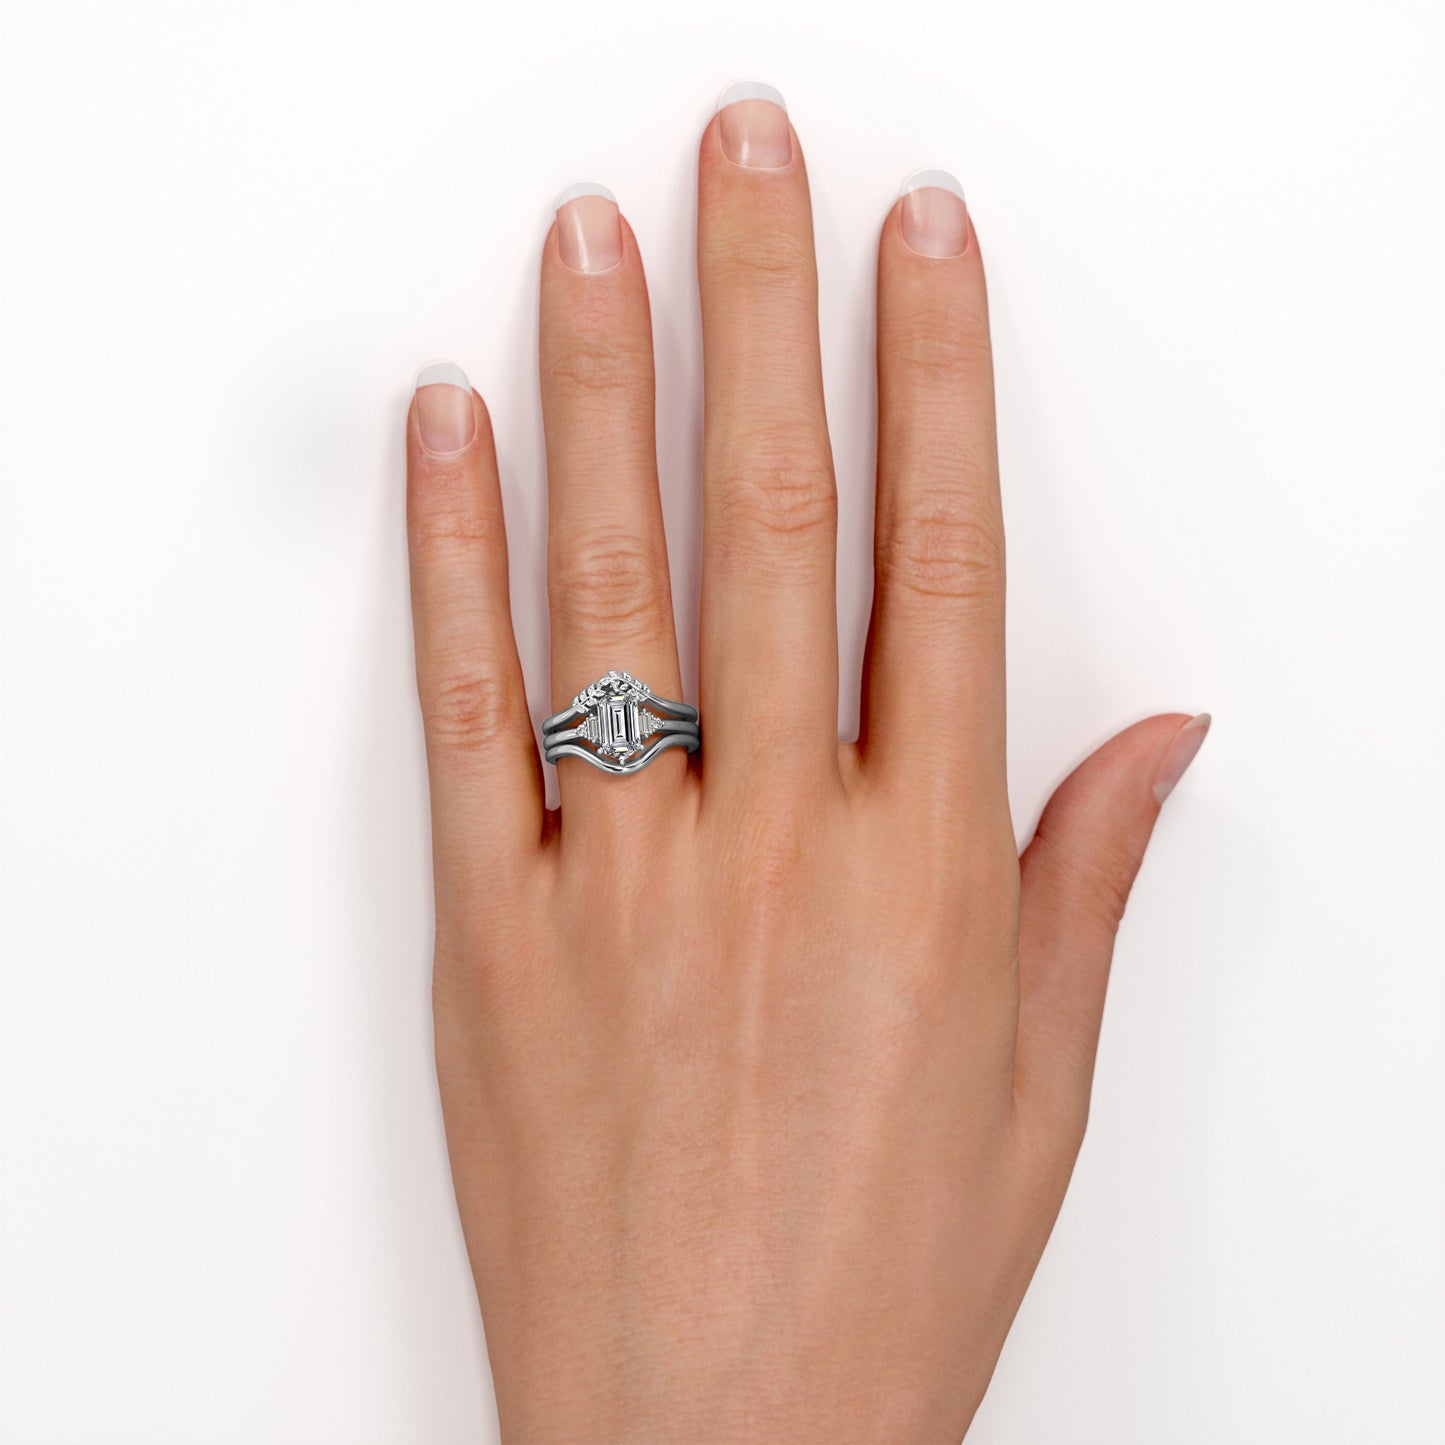 1.1 carat Hexagonal shaped Moissanite and diamond U-shaped Contoured trio wedding ring set in Rose gold